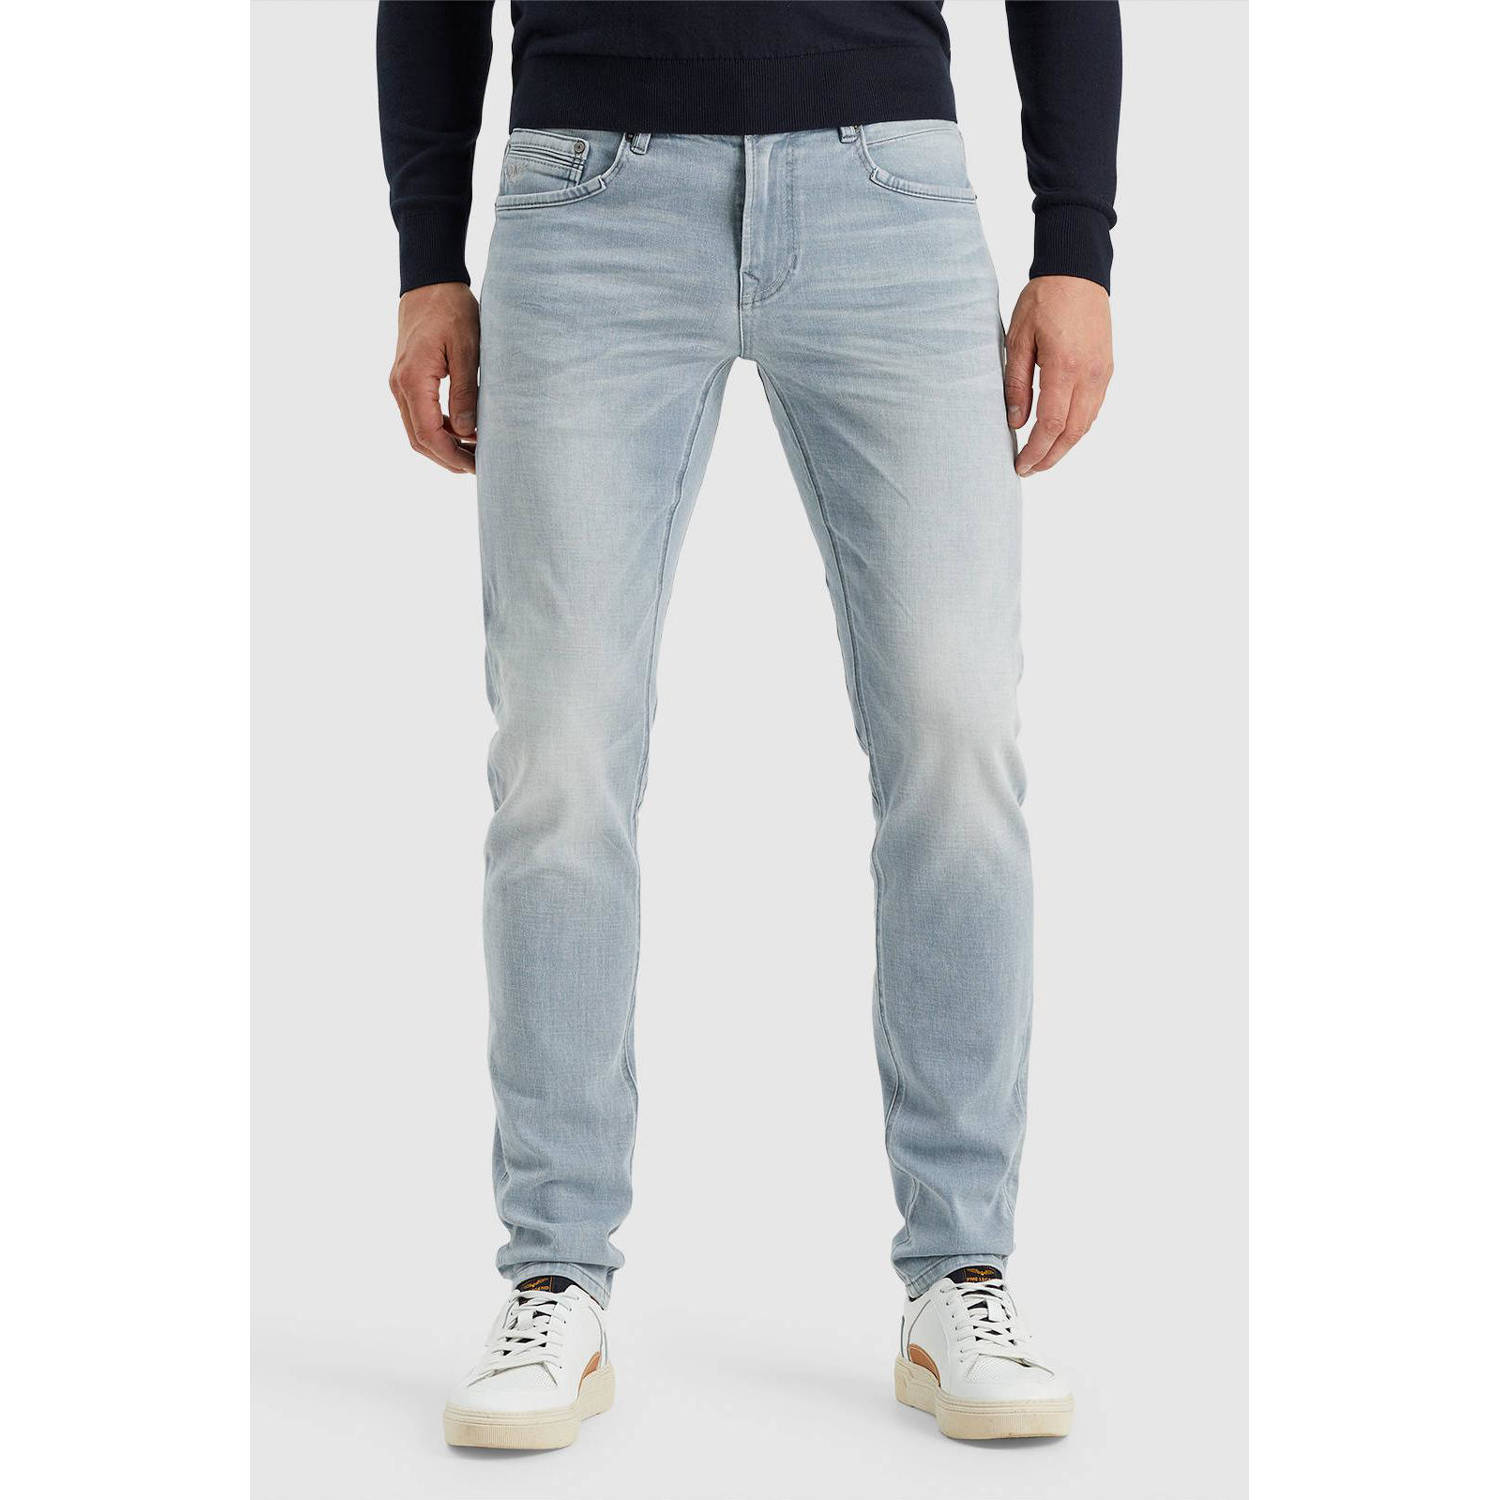 PME Legend slim fit jeans TAILWHEEL fresh light grey